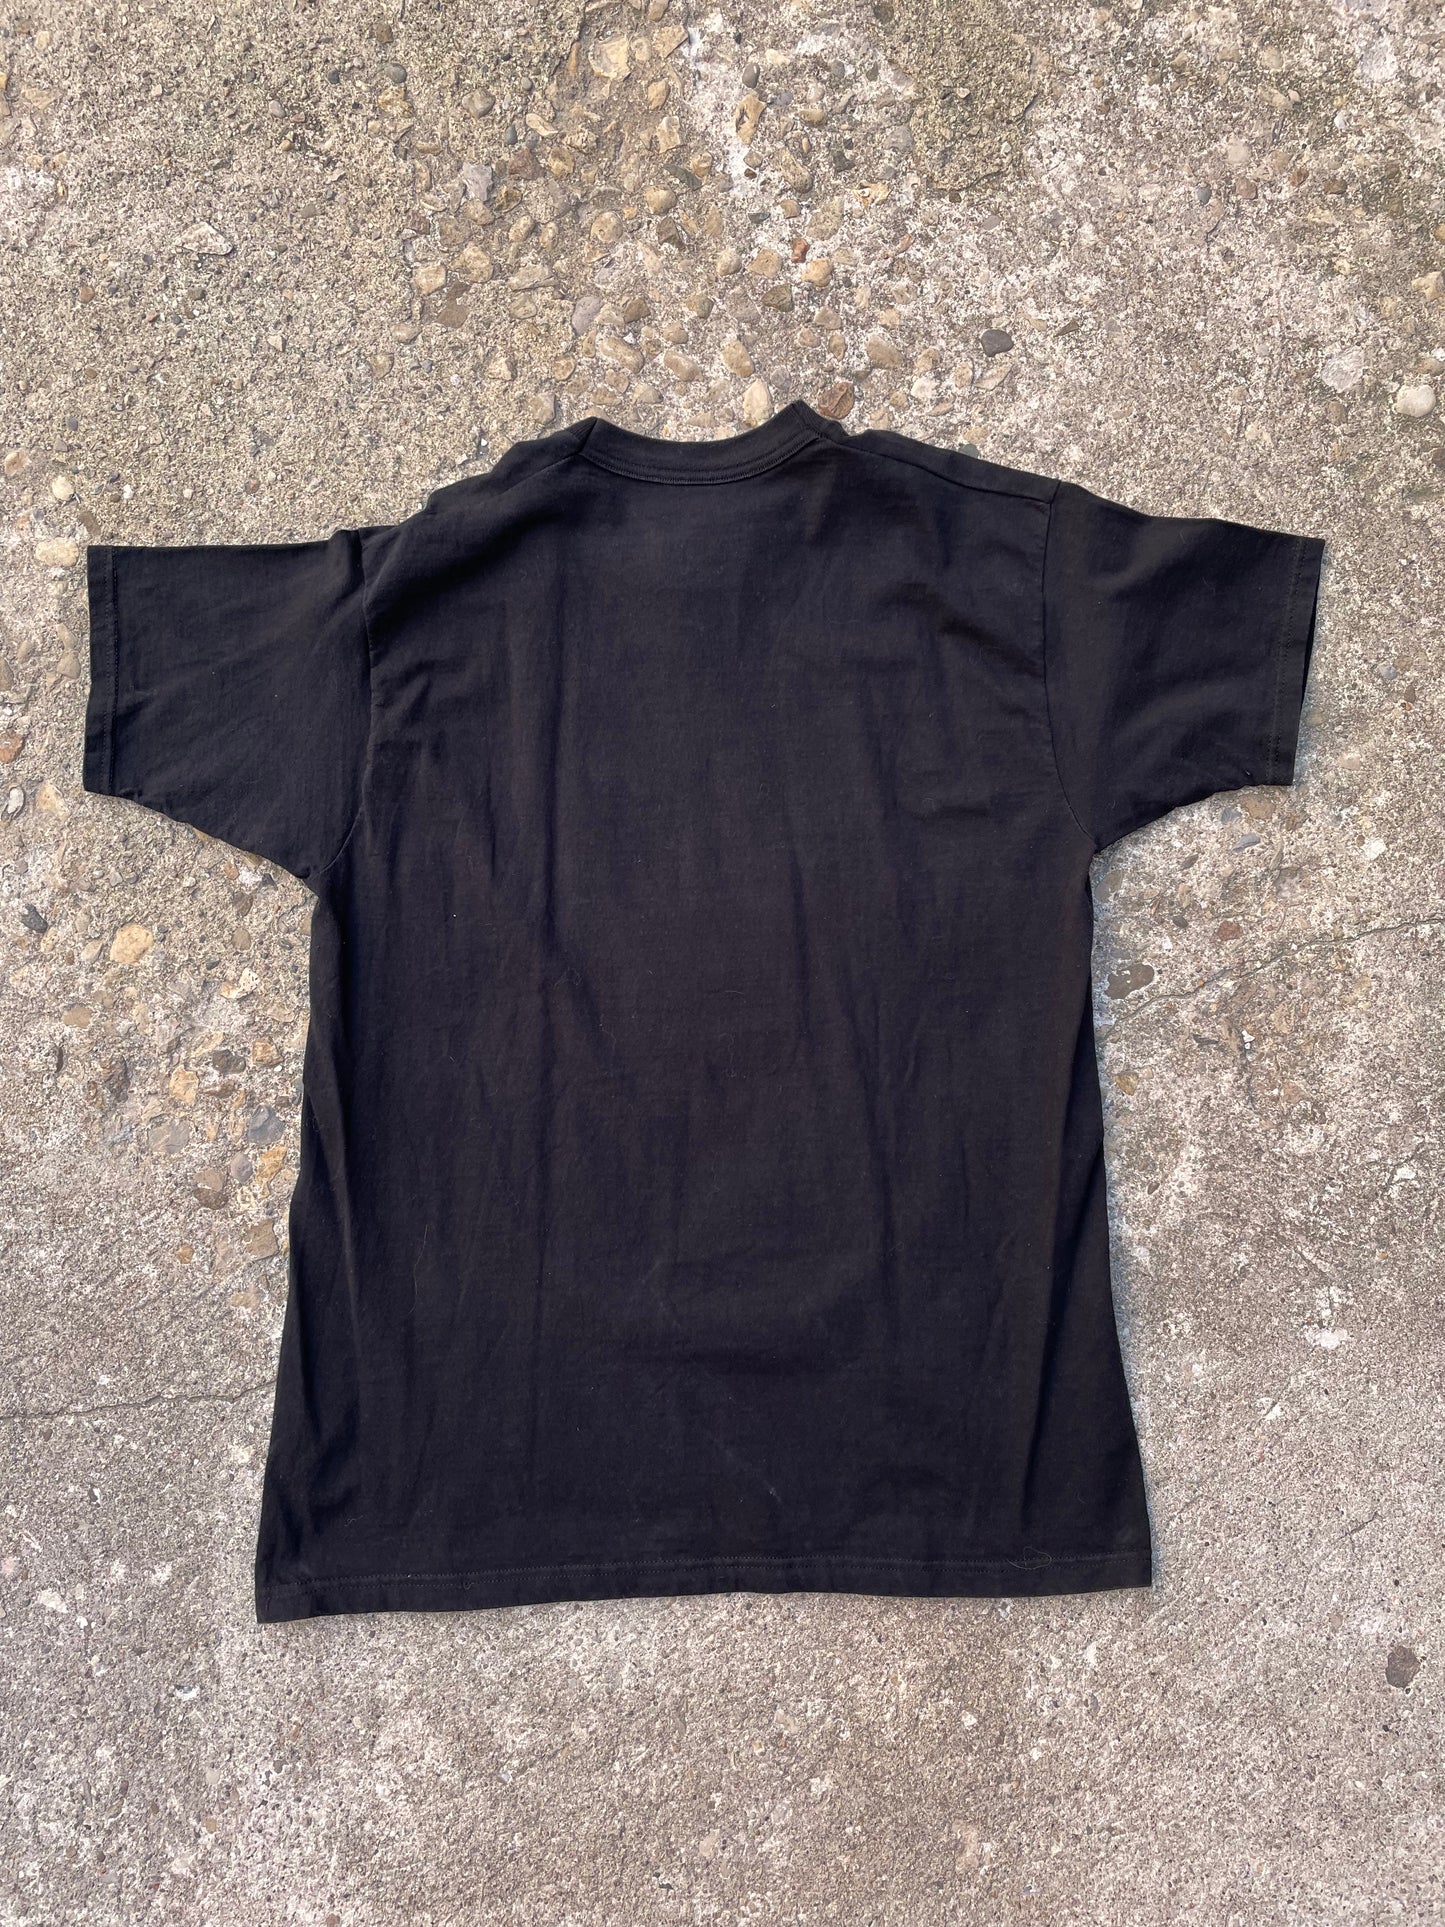 1990's/2000's Crest Spinbrush Graphic T-Shirt - XL